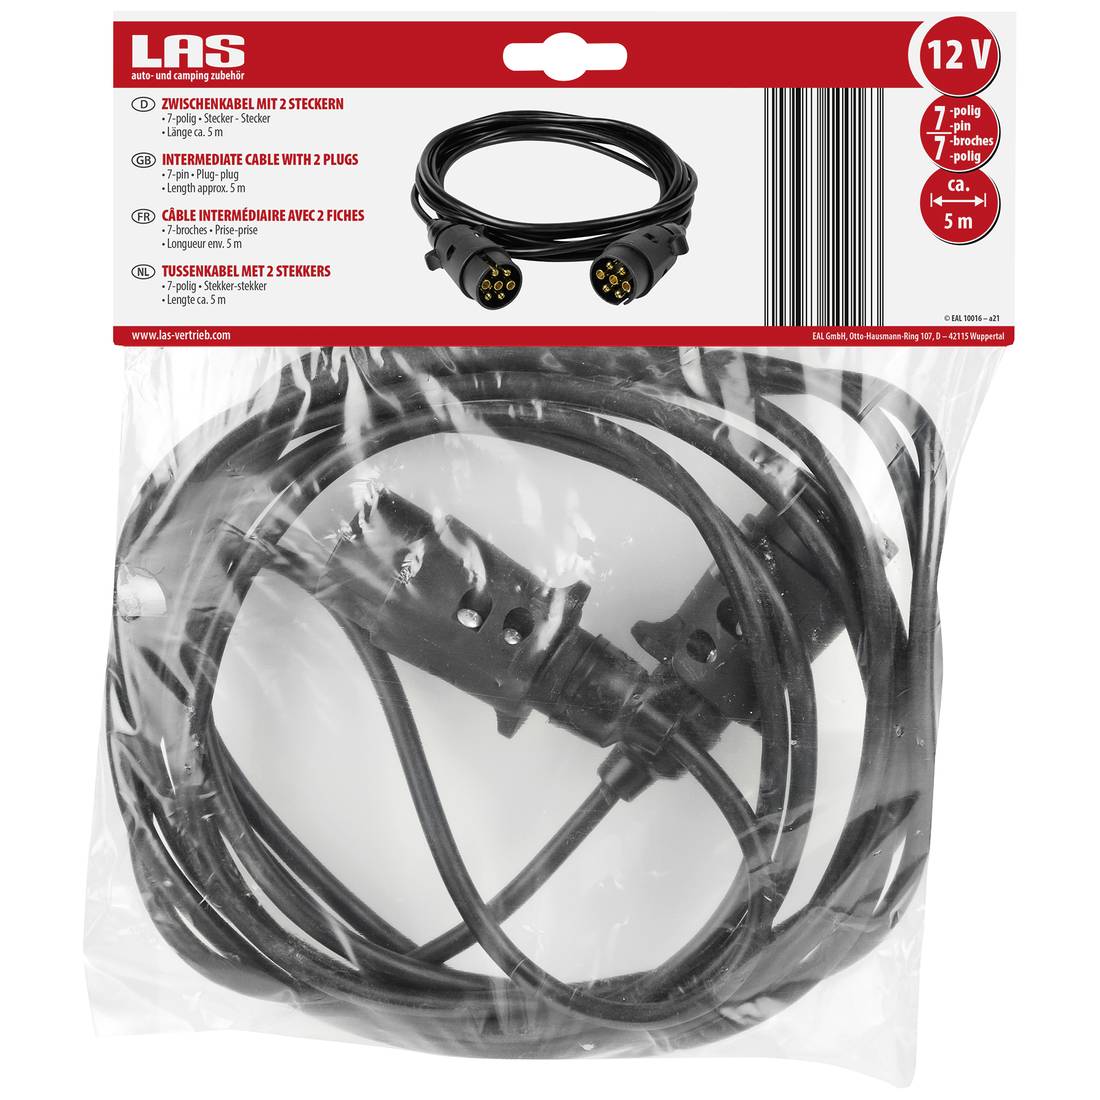 LAS 10016 produžni kabel [ - utikač 7-polni, uticnica 7-polna